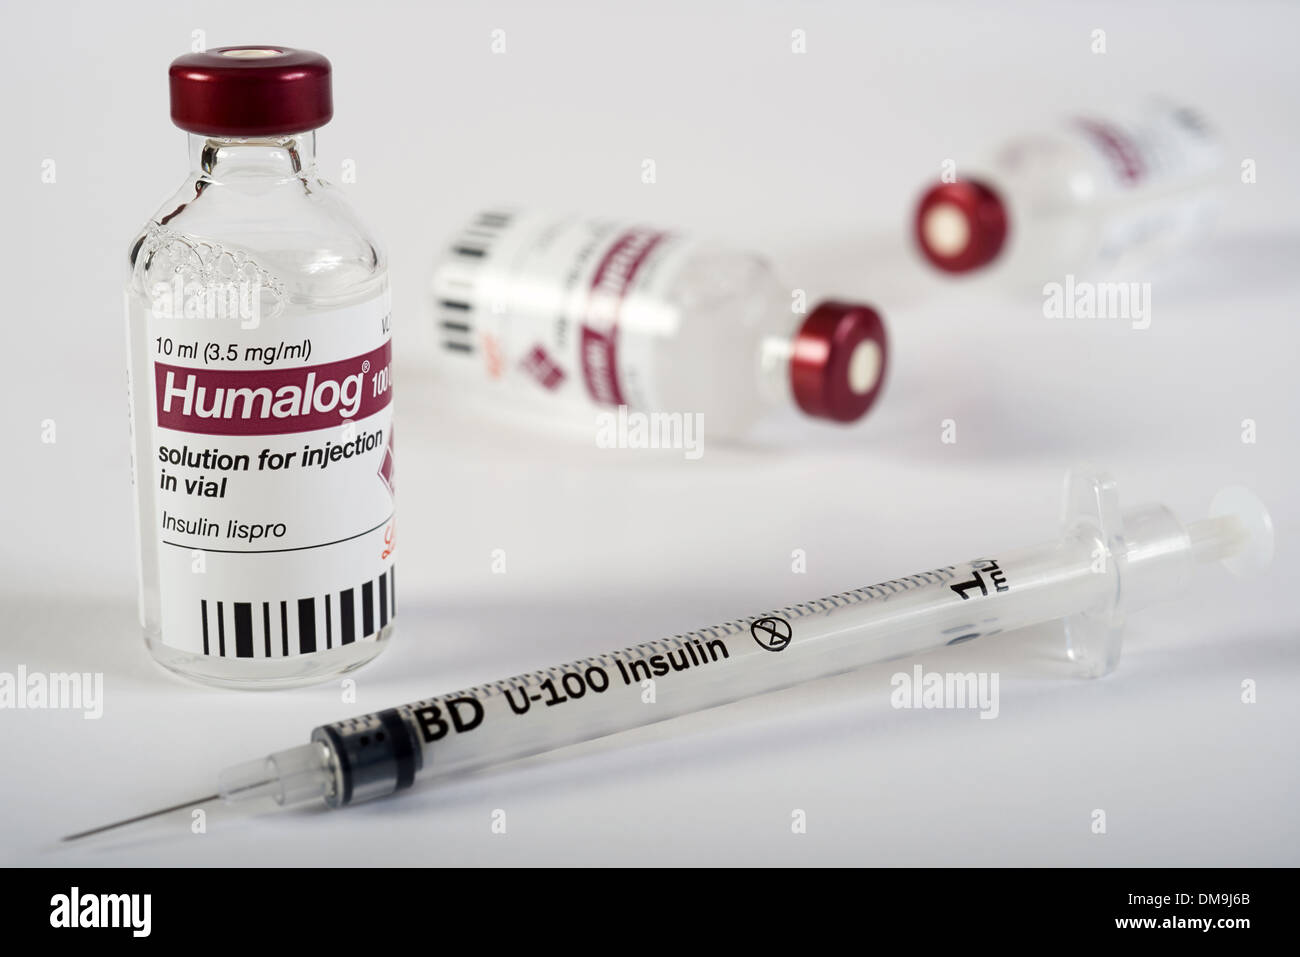 Humalog insulina lispro botellas de 10 ml Foto de stock